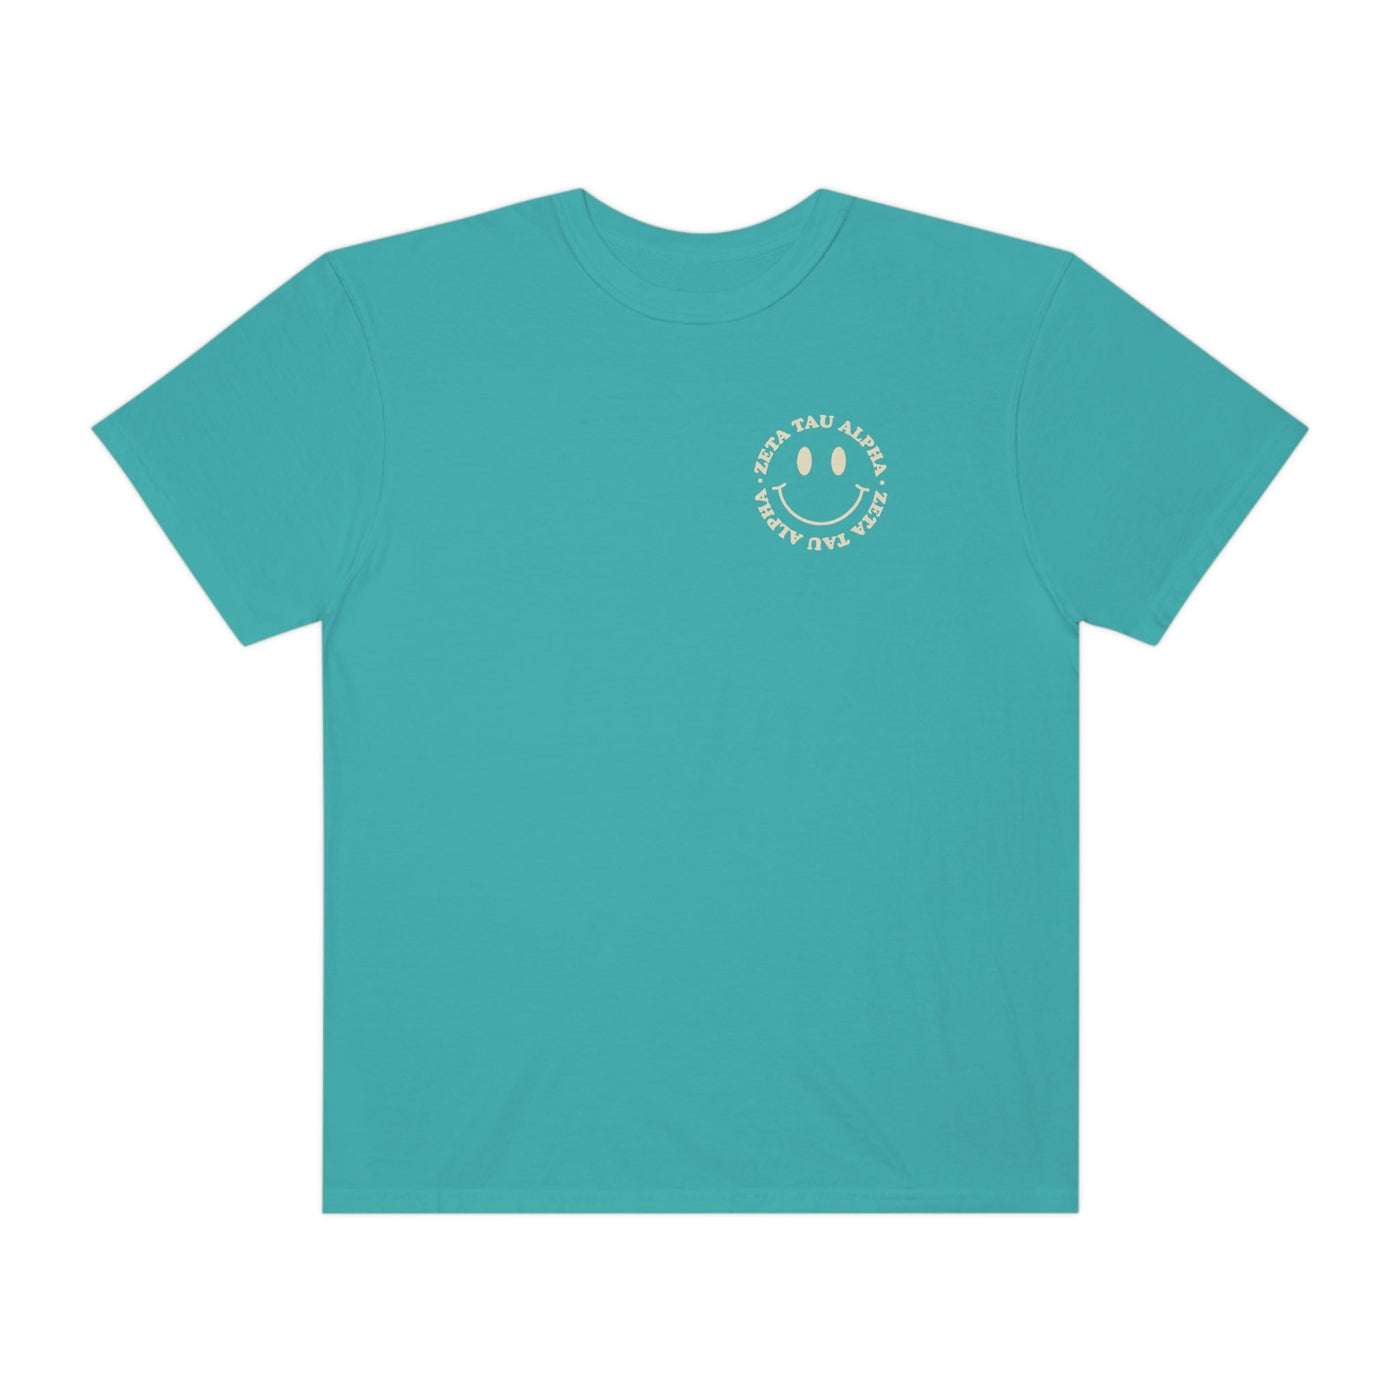 Zeta Tau Alpha Smile Sorority Comfy T-Shirt